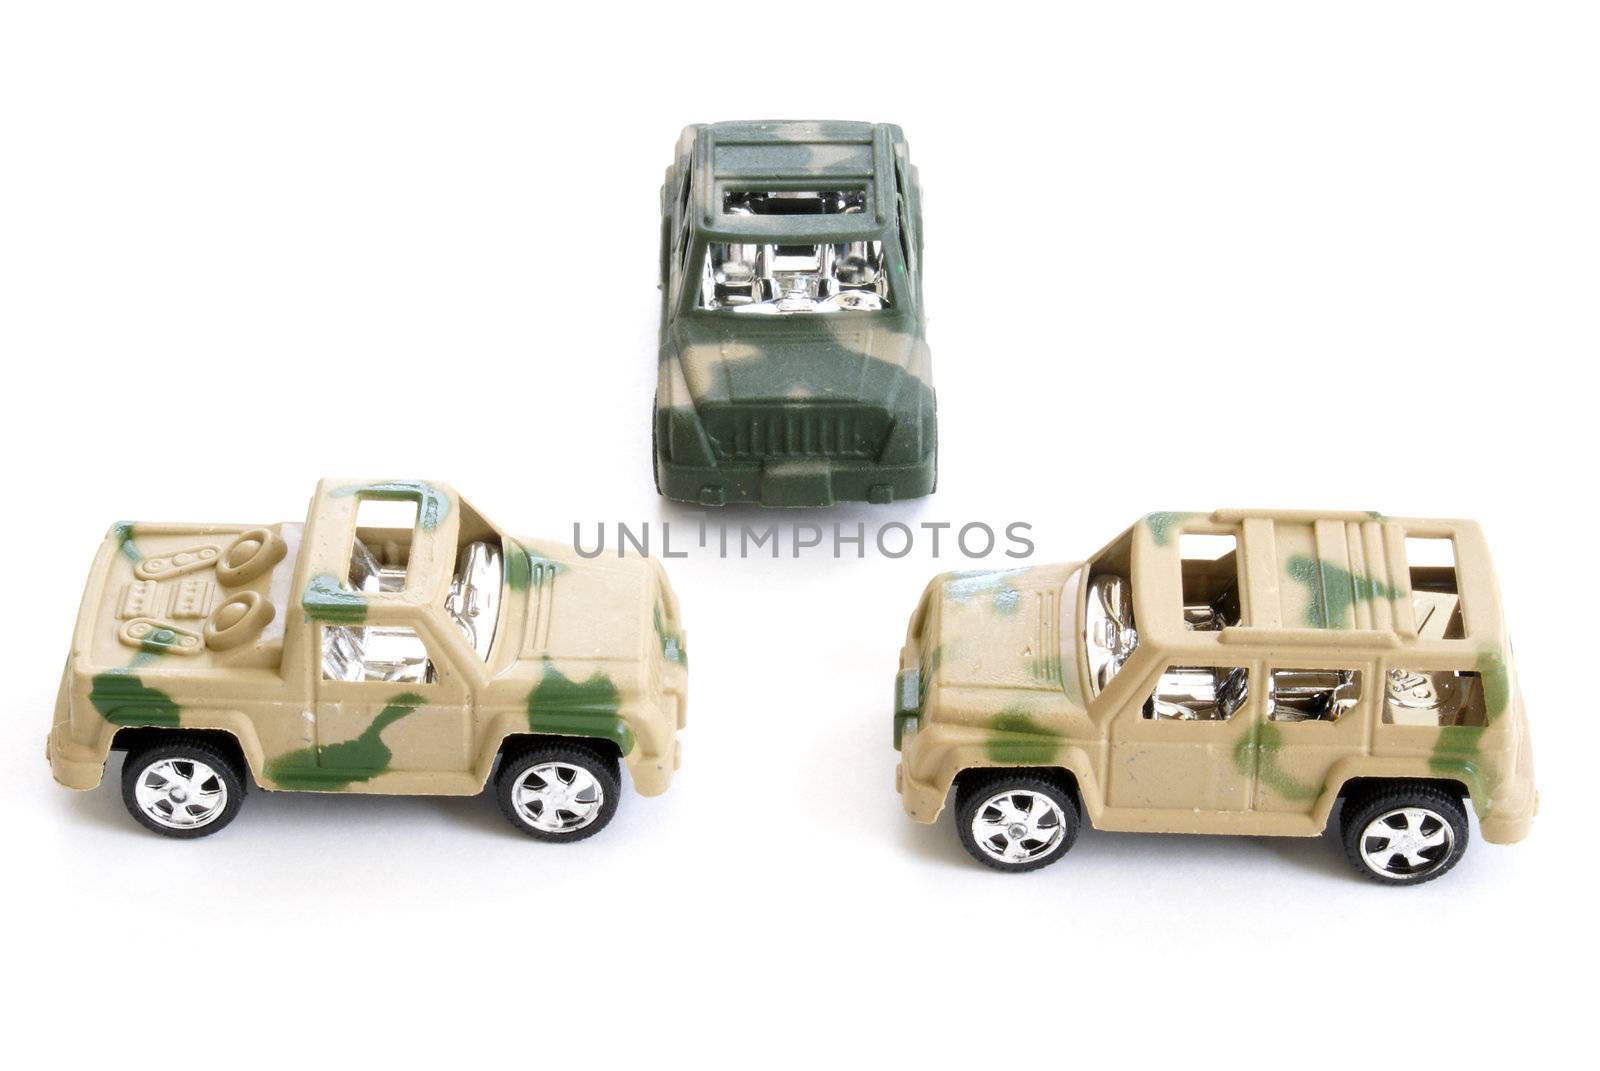 Three toy military vehicles on white background.